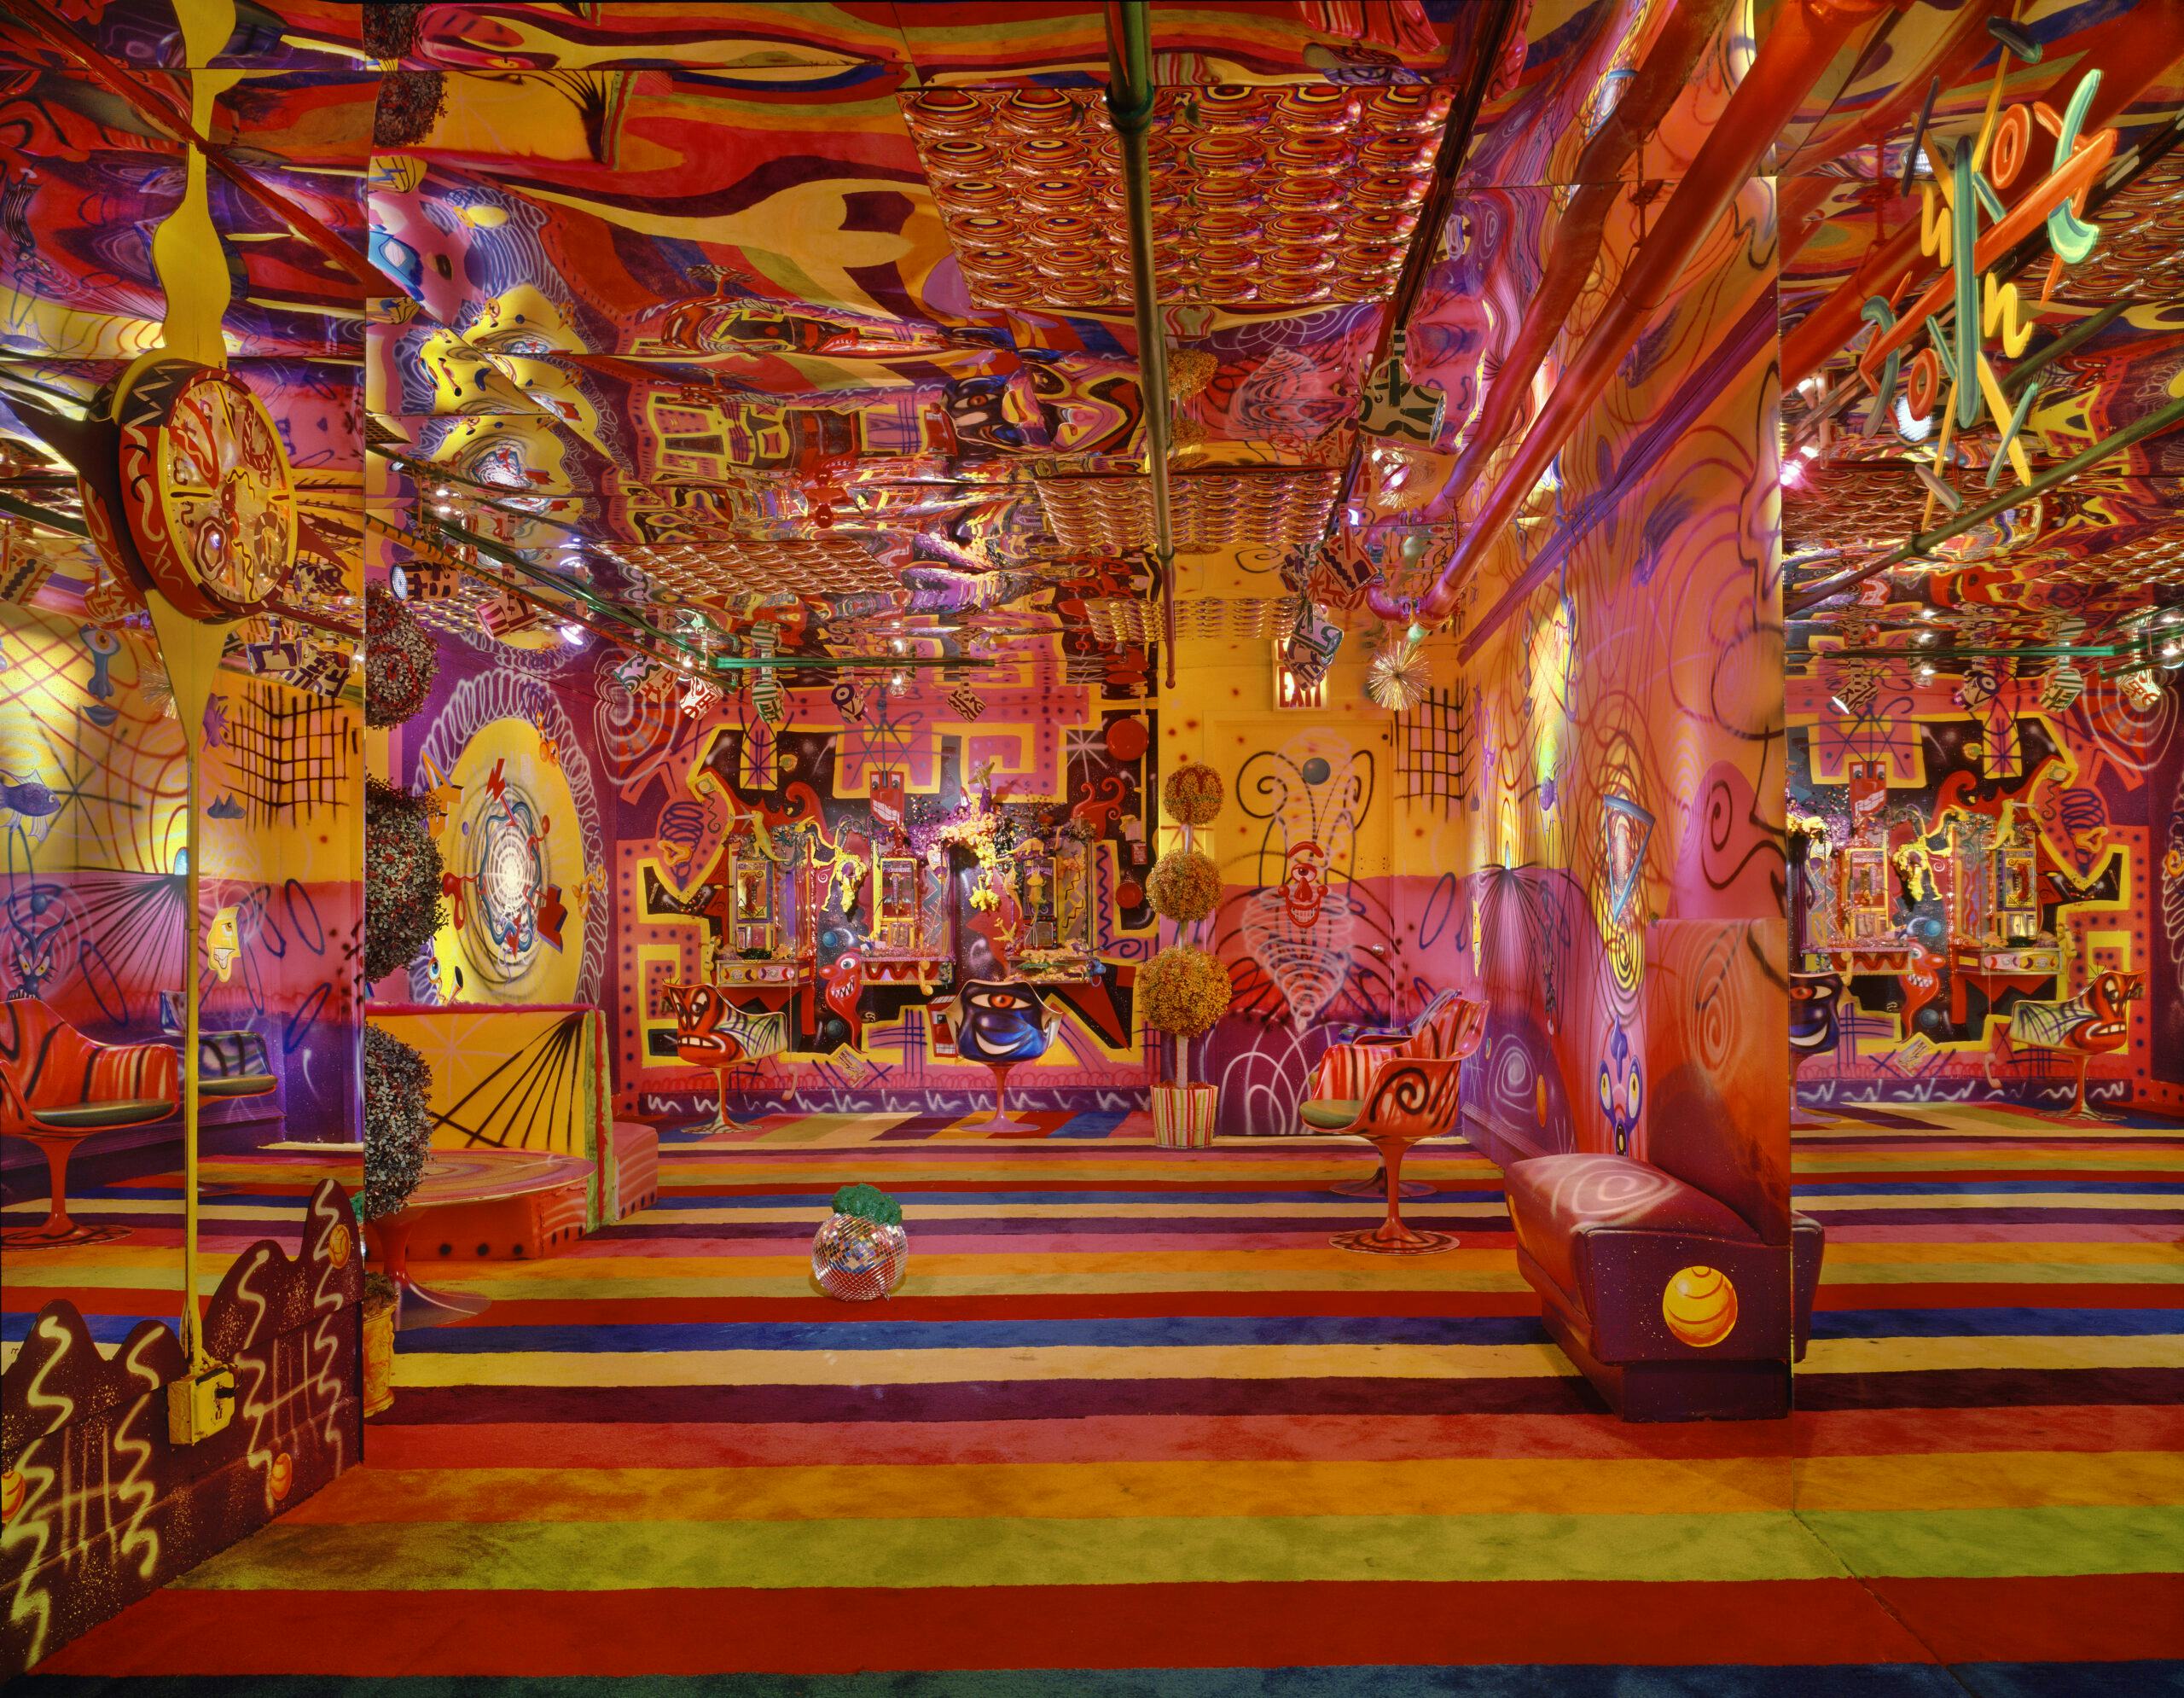 Palladium, interieur door Arata Isozaki. Kunst door Kenny Scharf. Beeld Timothy Hursley